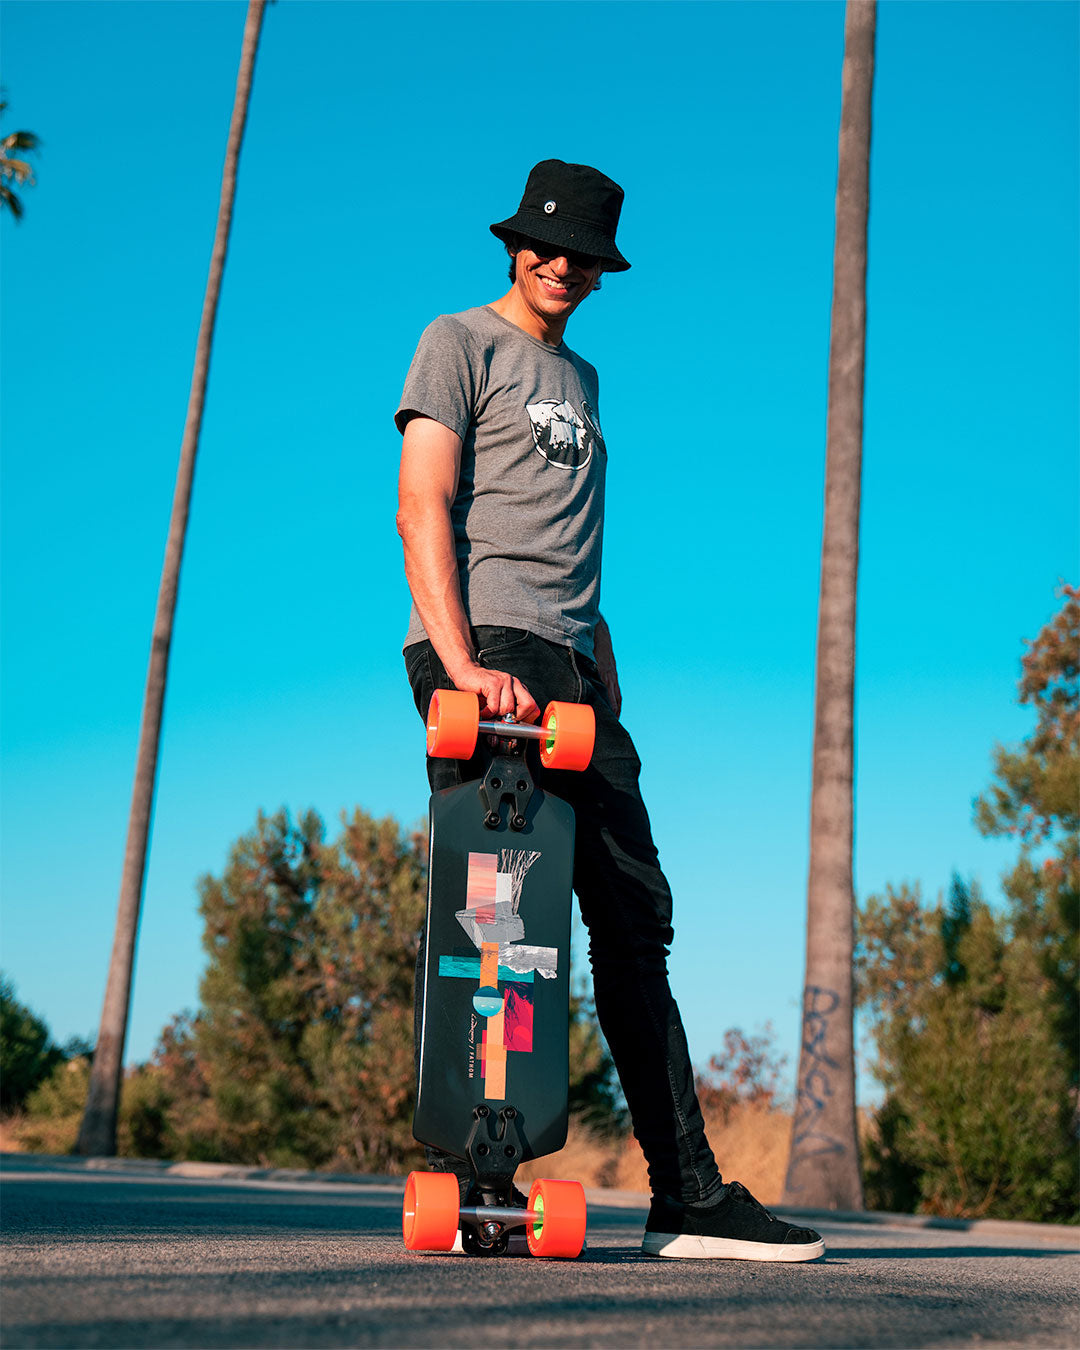 Ari Chamasmany with the Loaded Fathom longboard skateboard